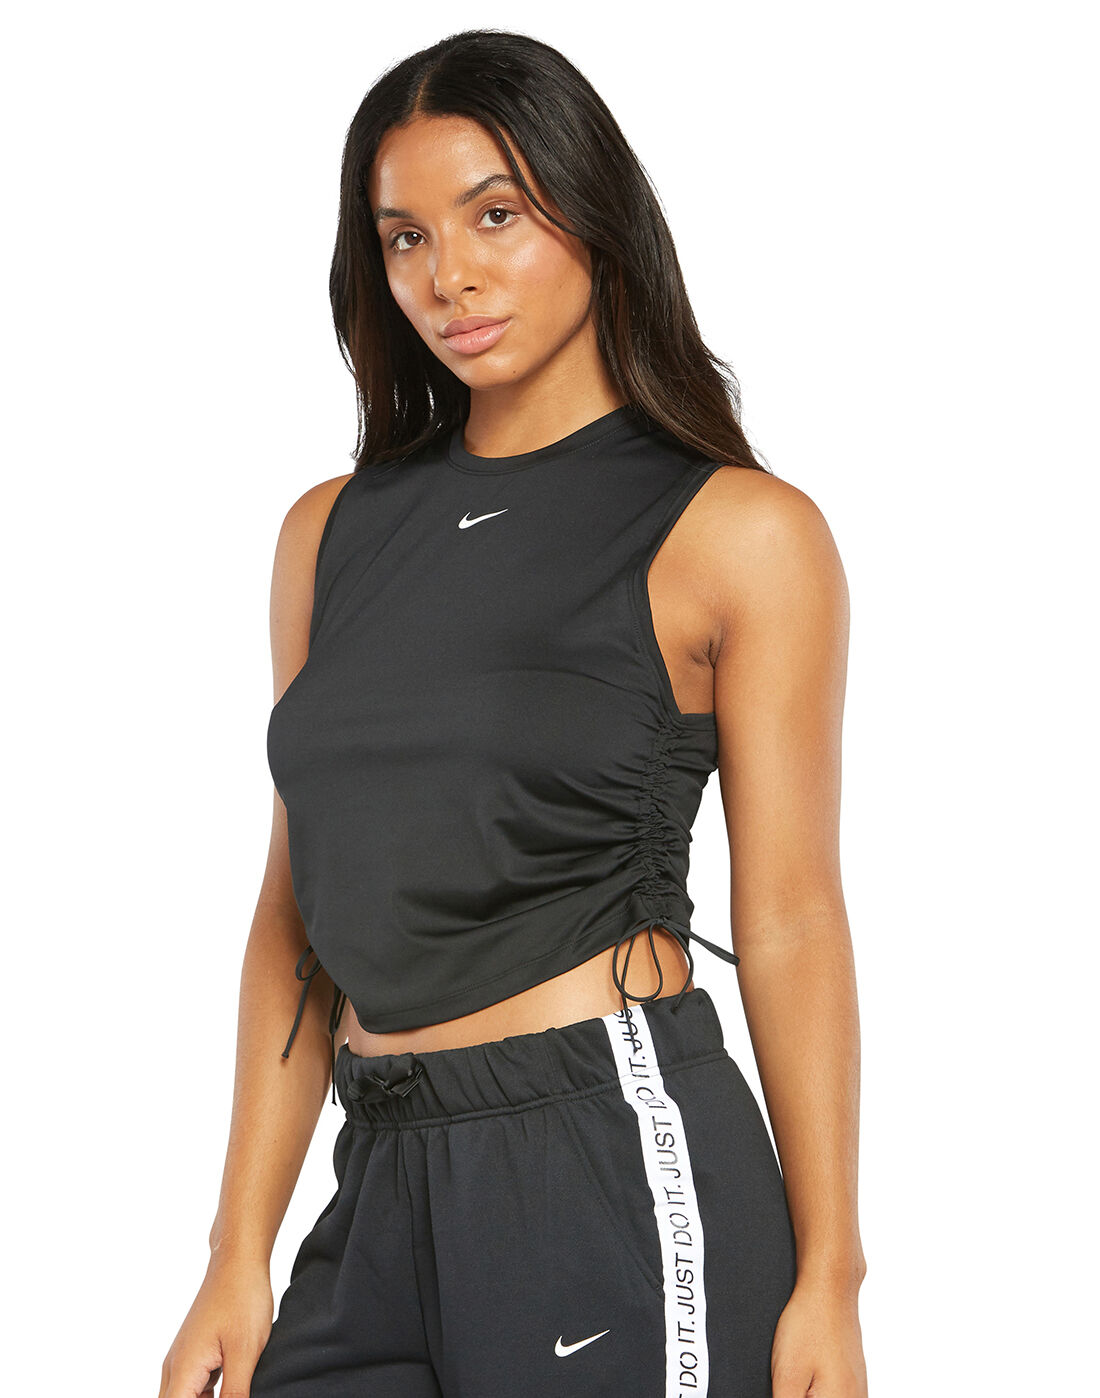 Nike Womens Meta Tank Top - Black 